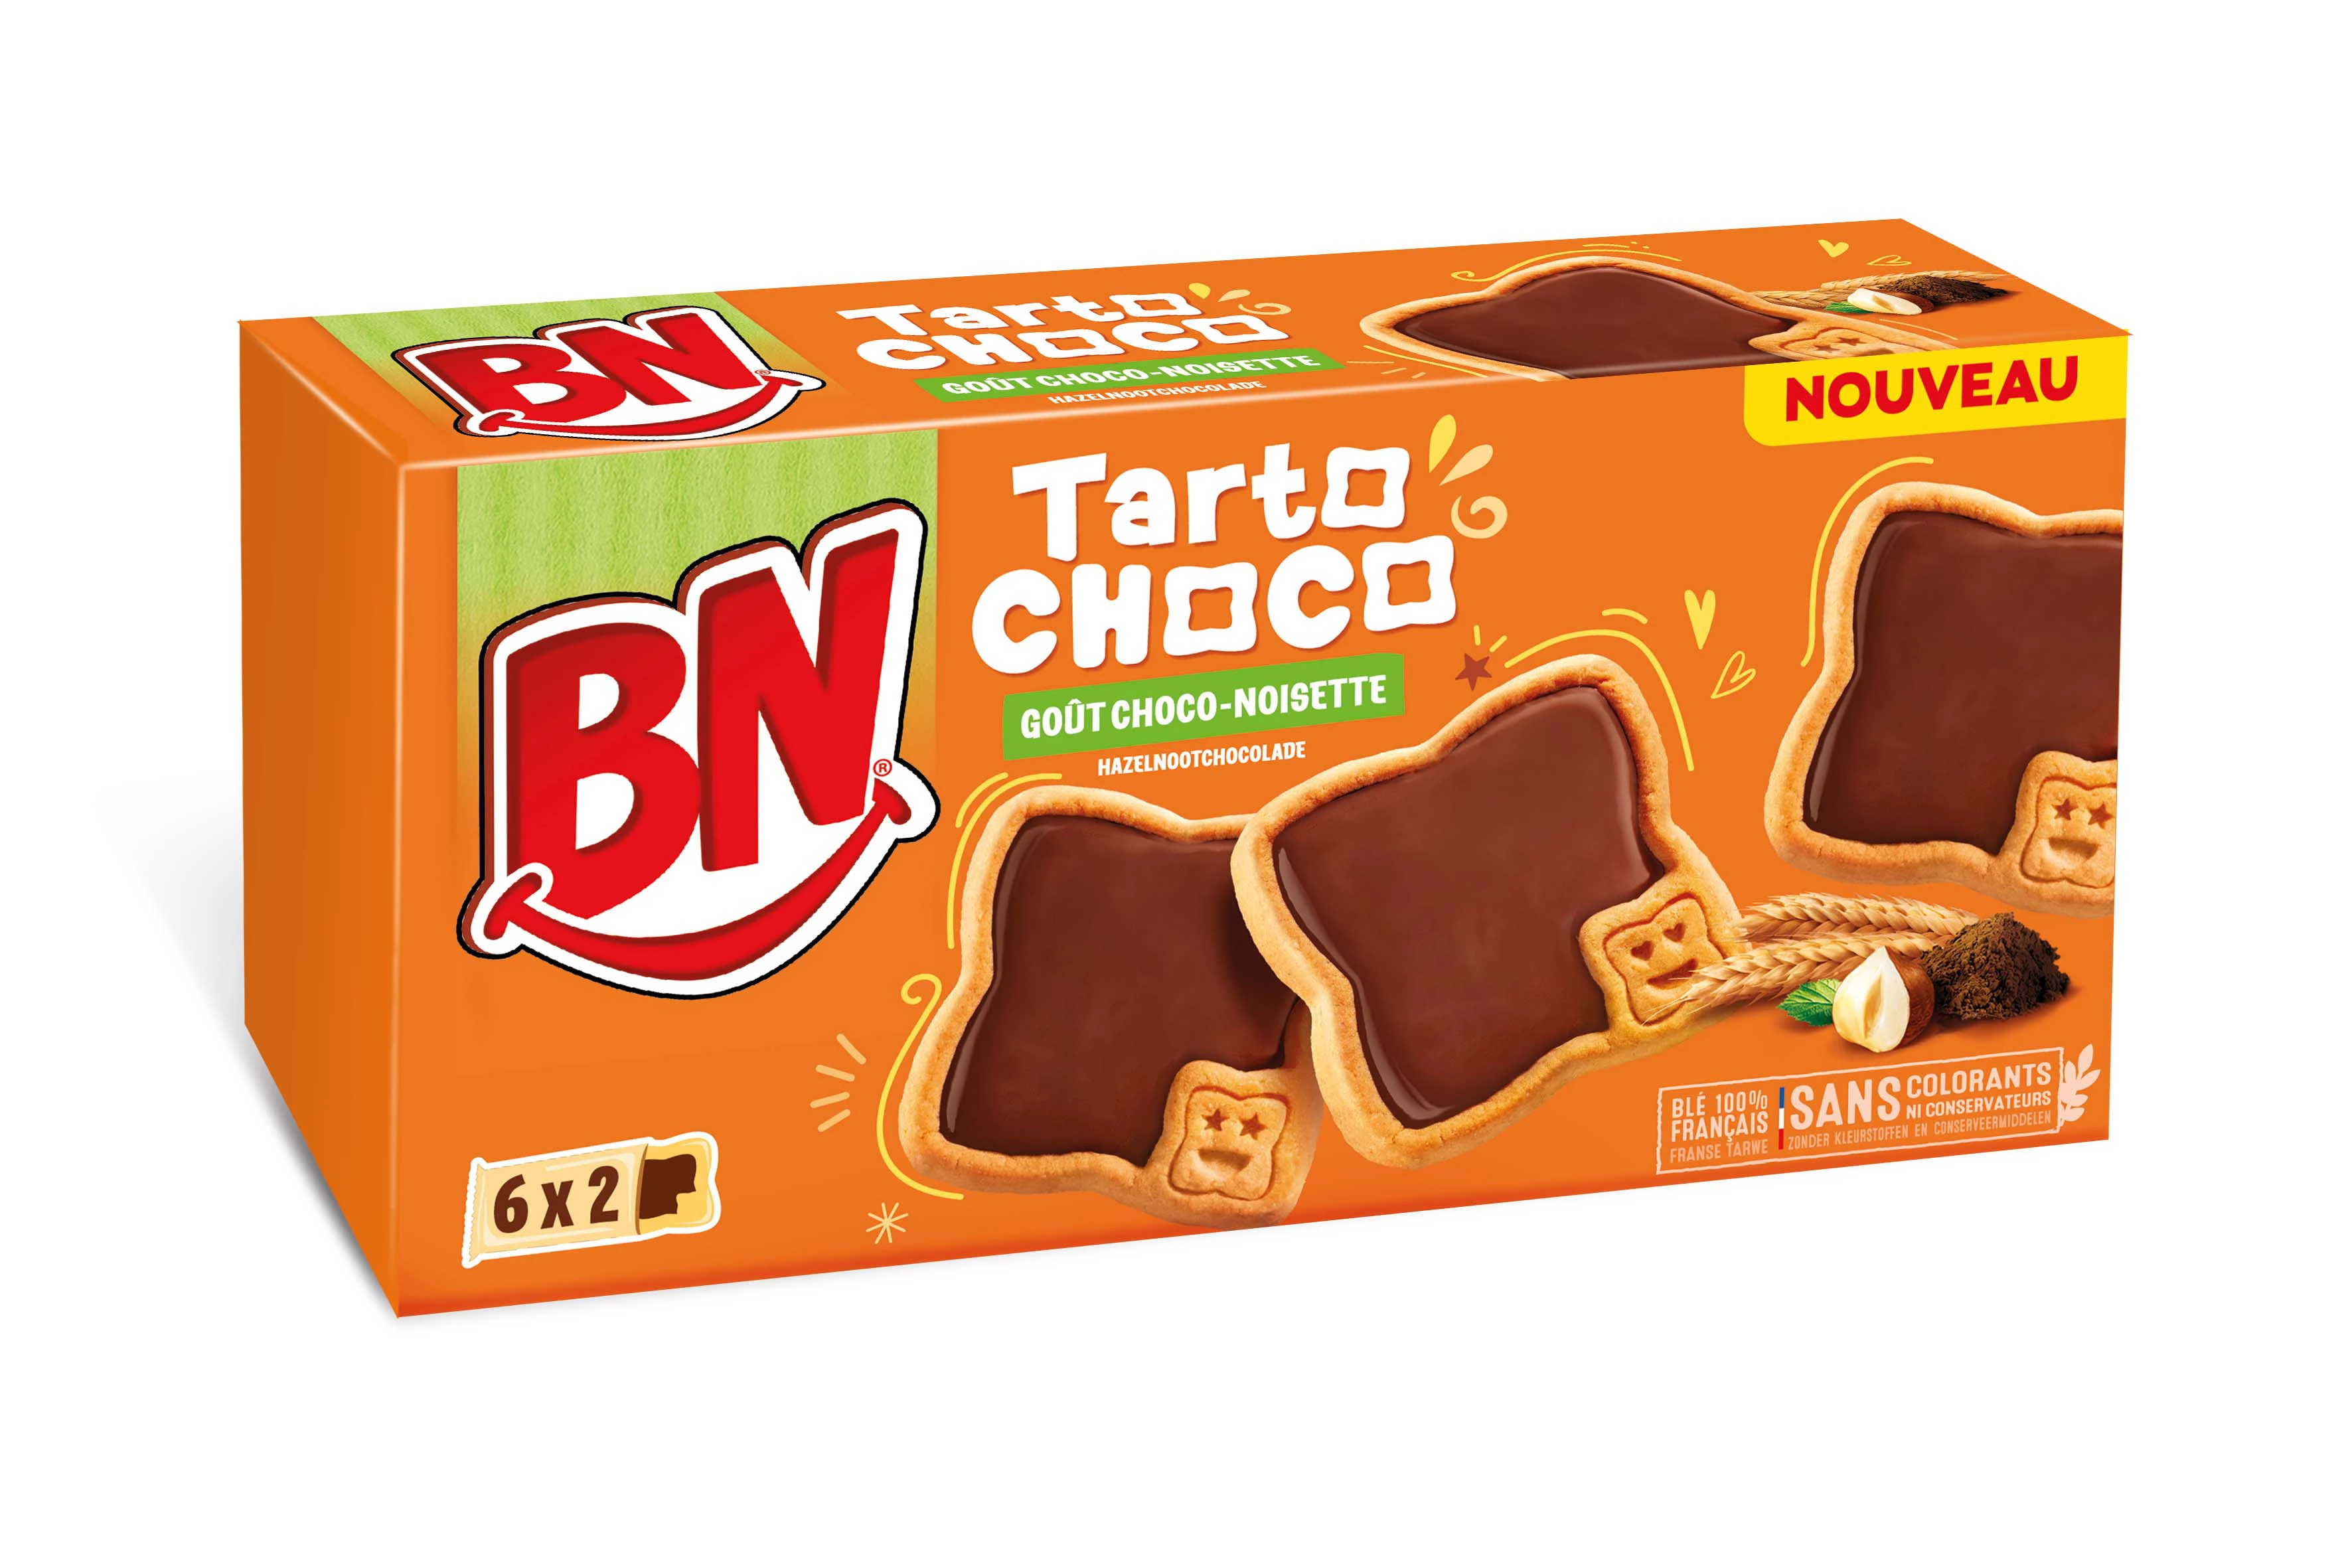 Biscuits Nappés Chocolat Tarto Choco, 200g - BN